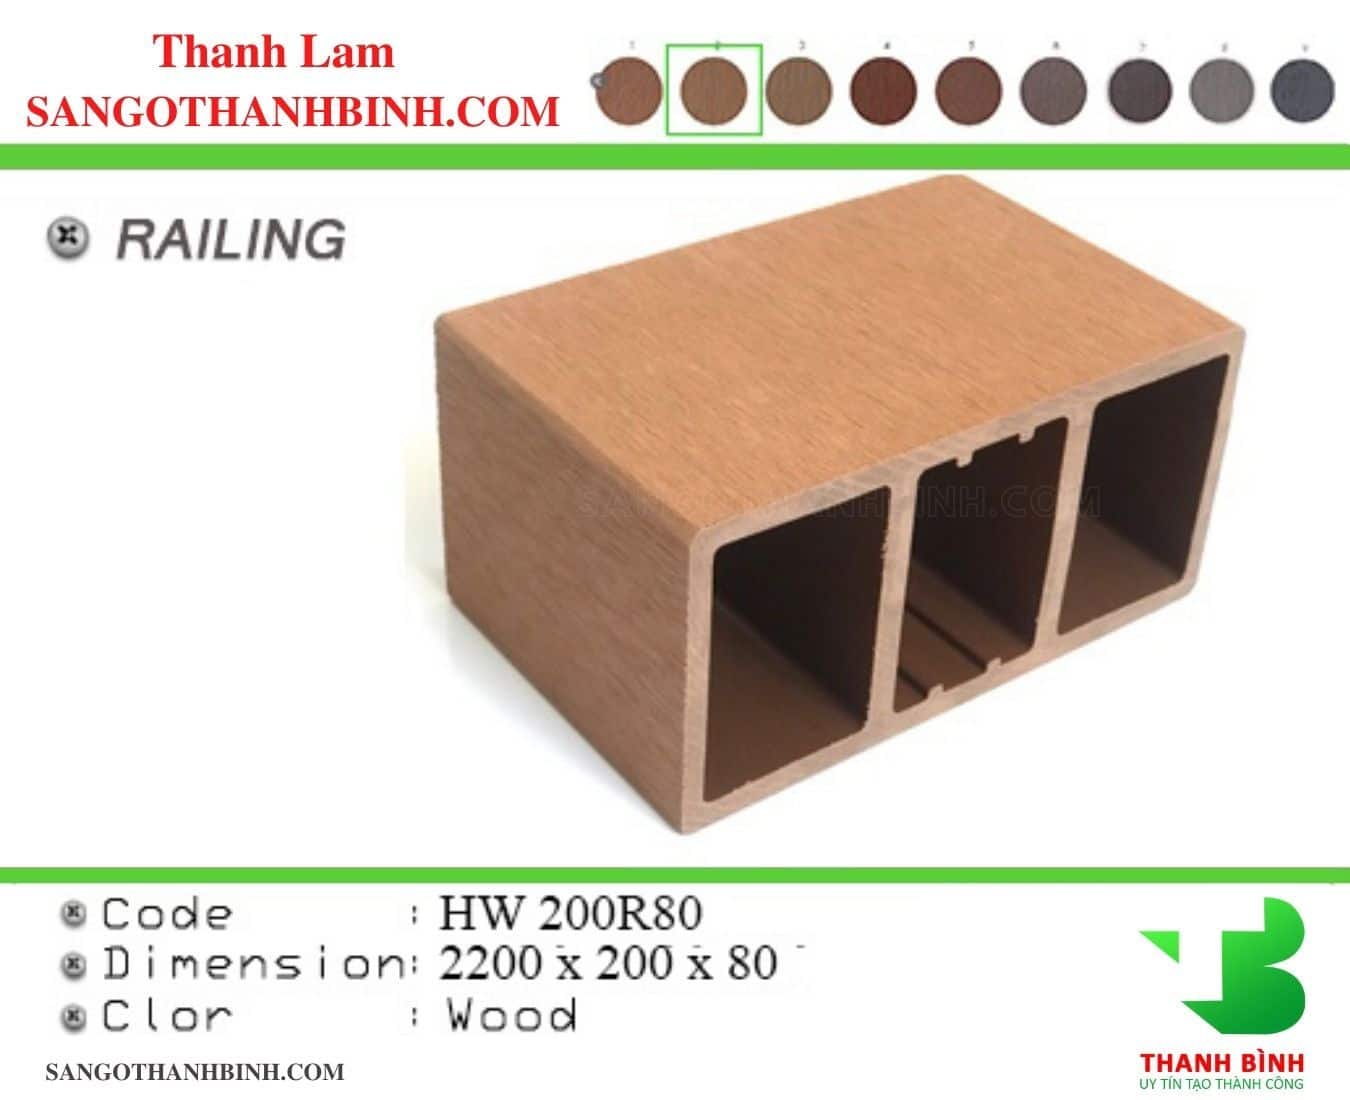 Thanh Lam Go Nhua Trang Tri Ngoai That Ma HW200R80 Wood